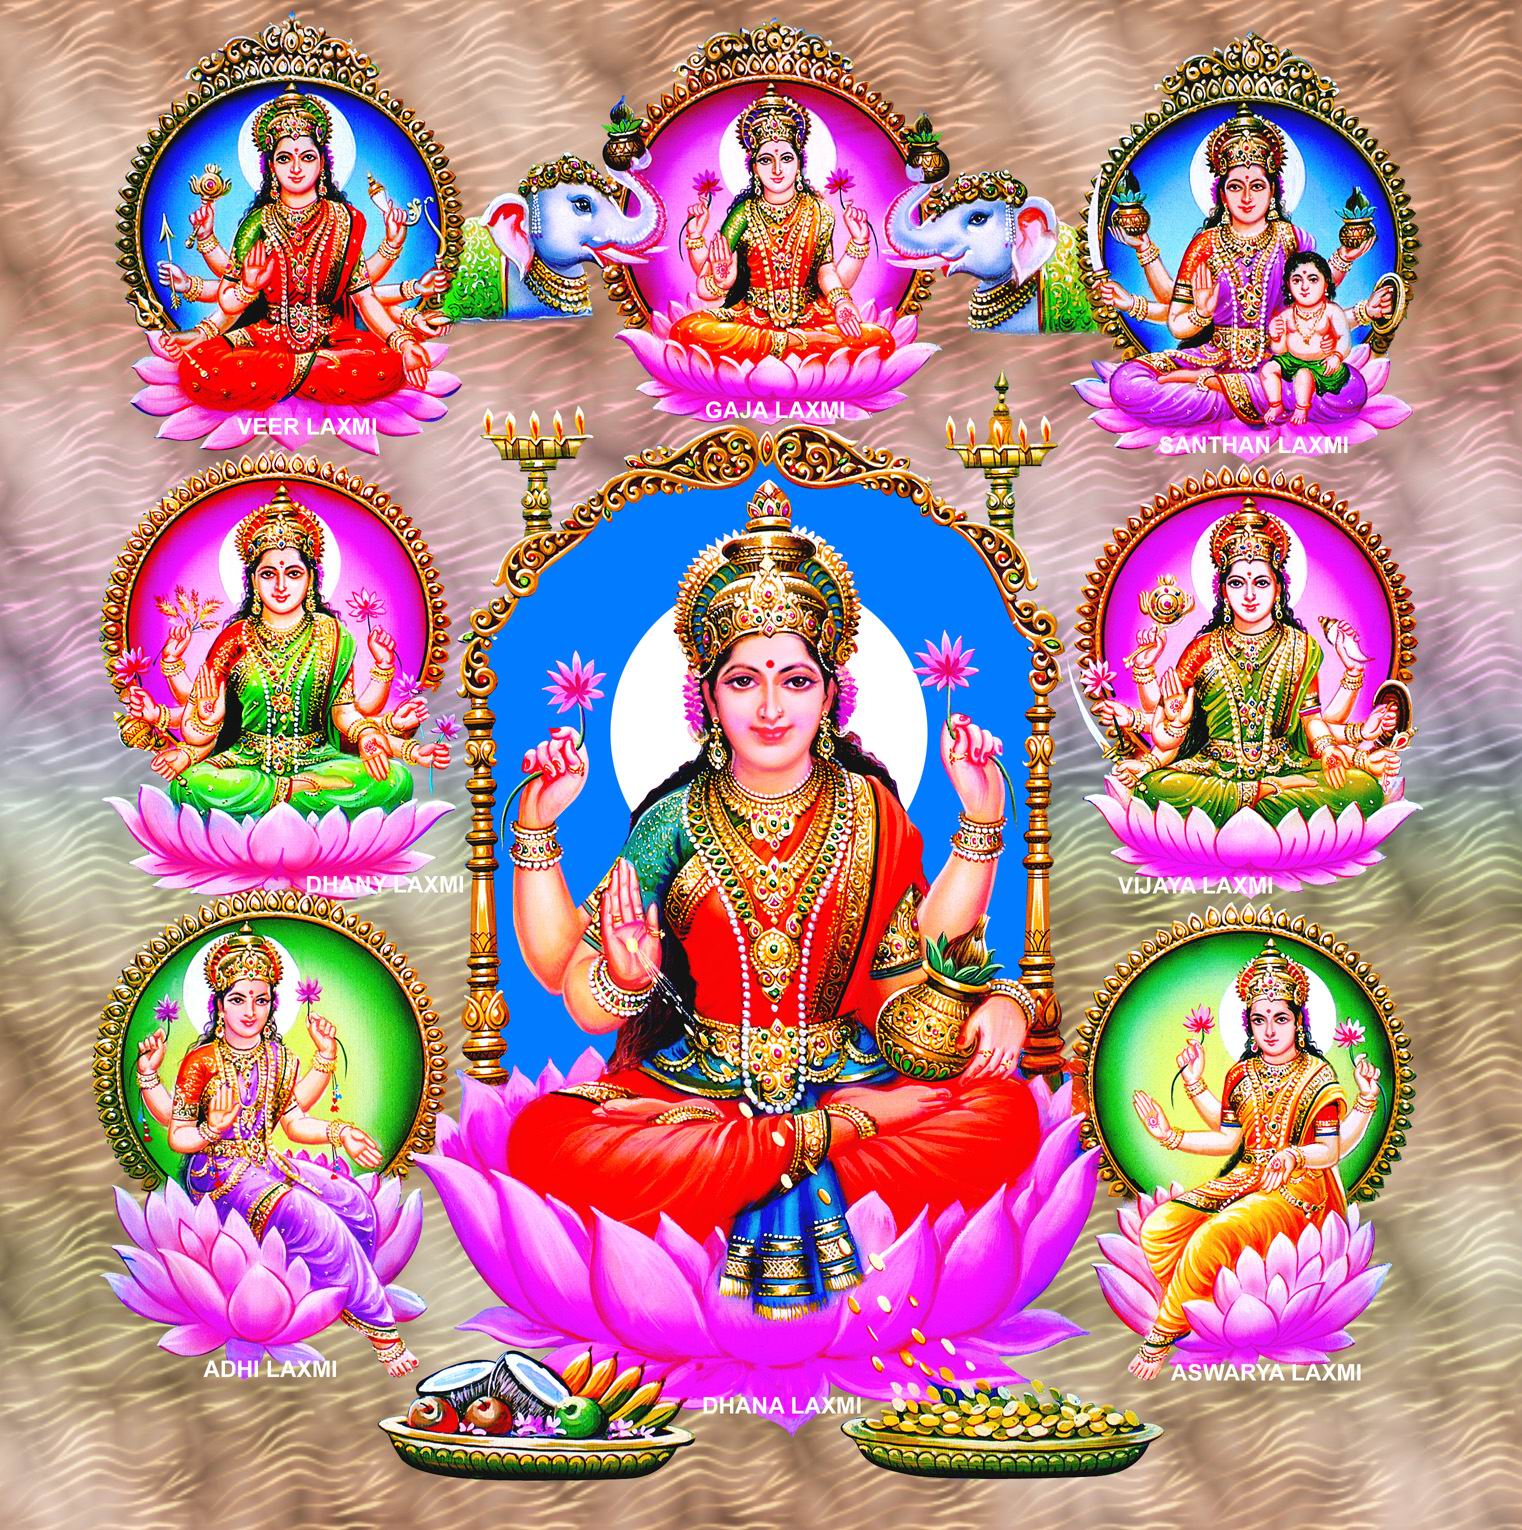 Goddess Ashta Lakshmi Picture Download. Hindu Devotional Blog